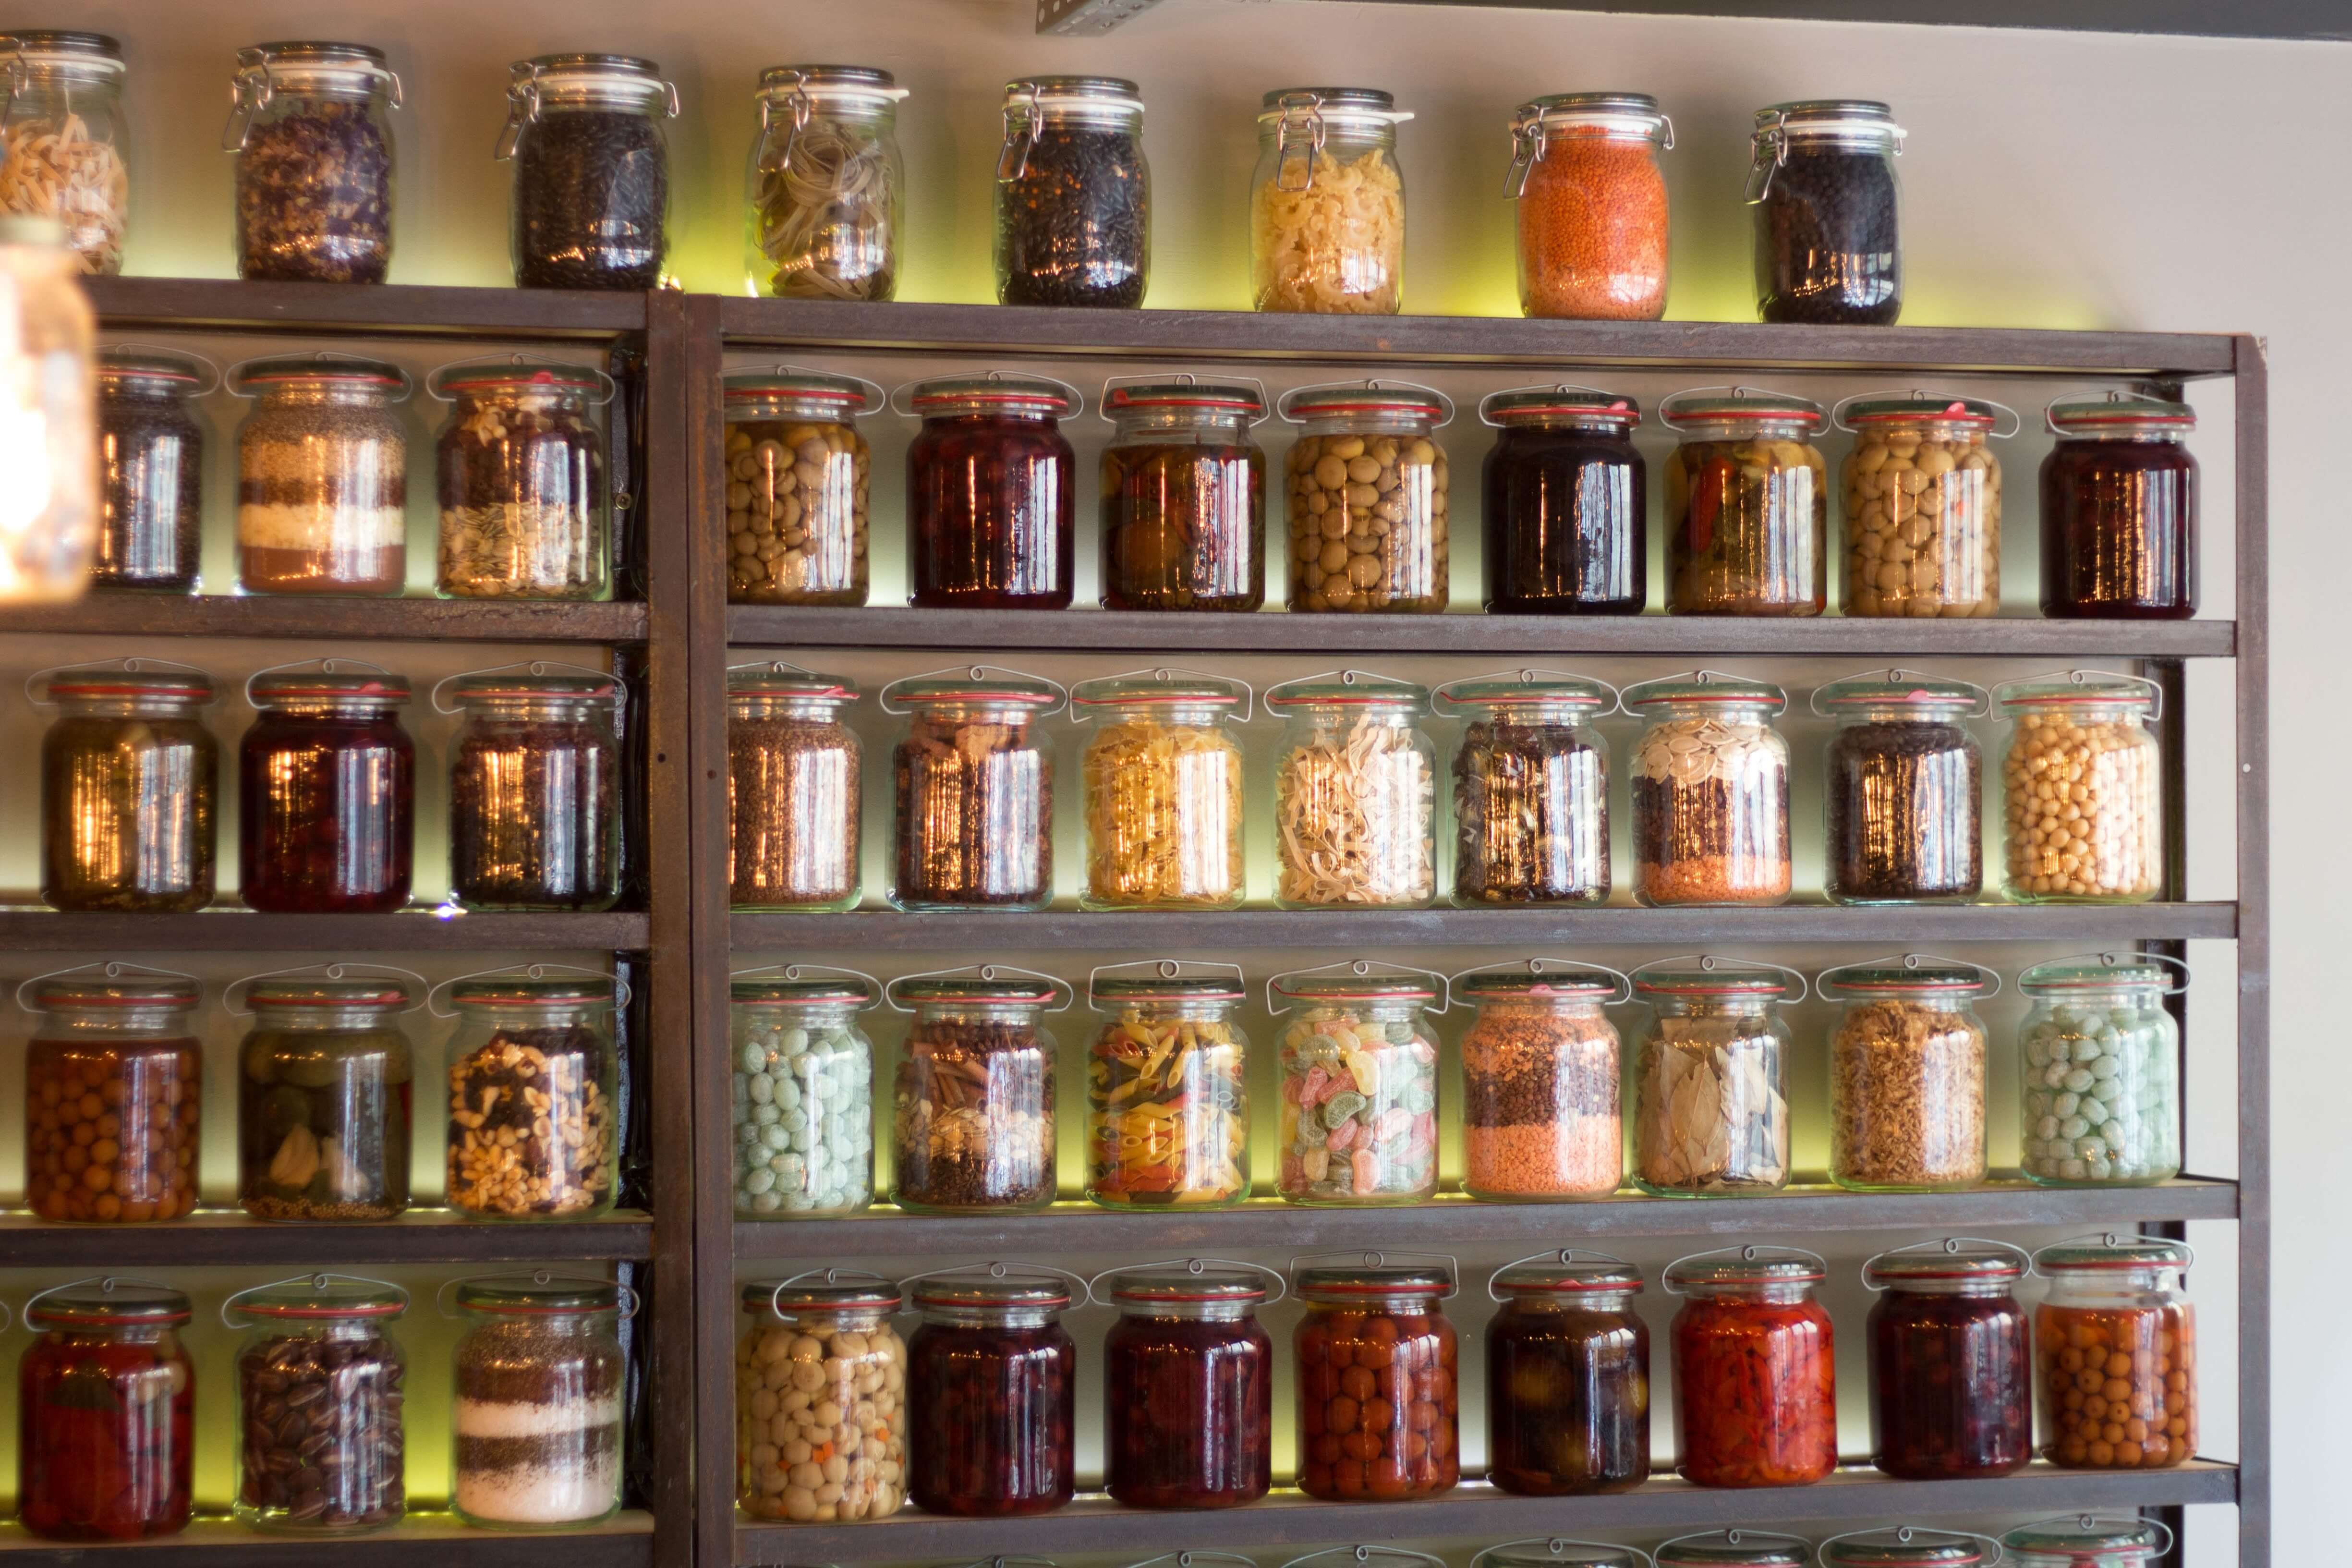 A series of jars arranged on a shelp